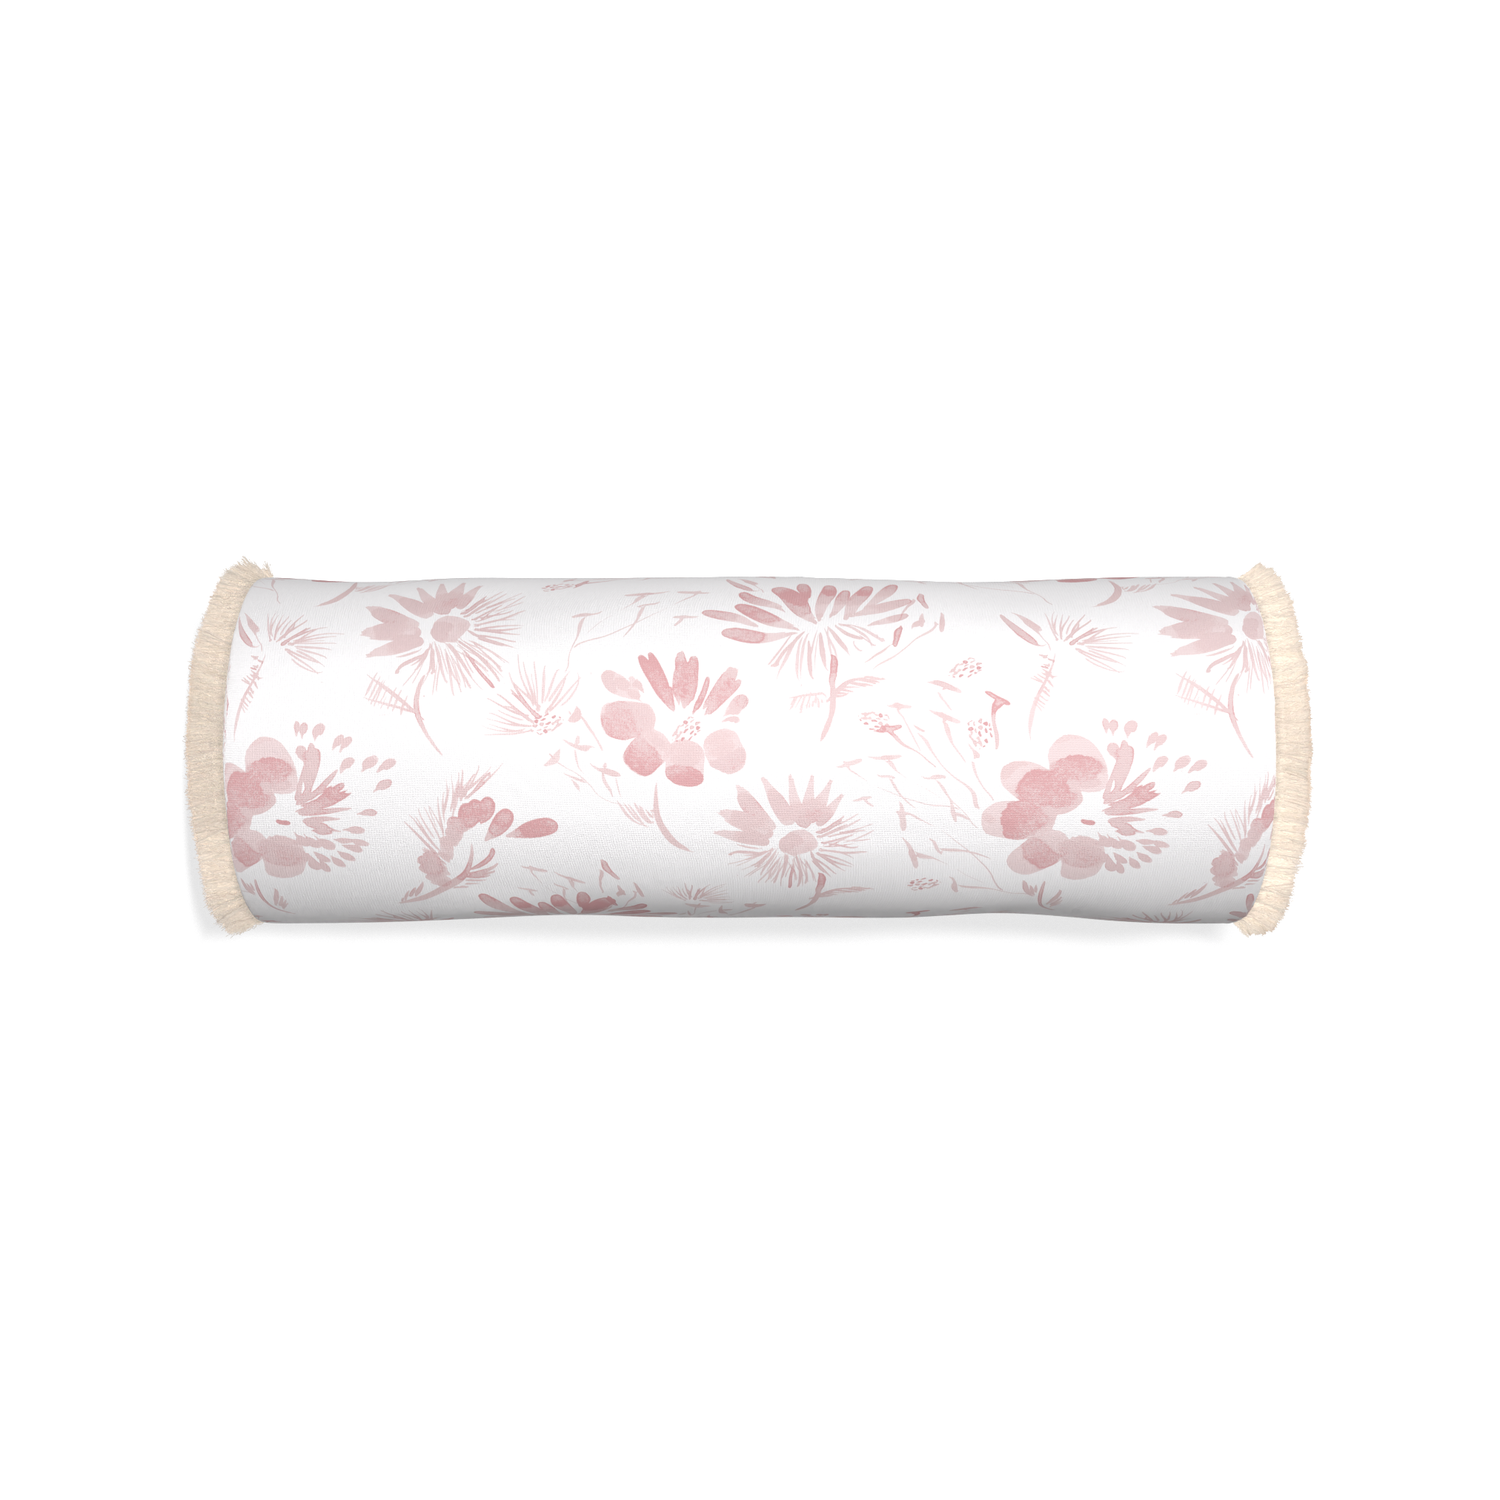 Bolster blake custom pink floralpillow with cream fringe on white background